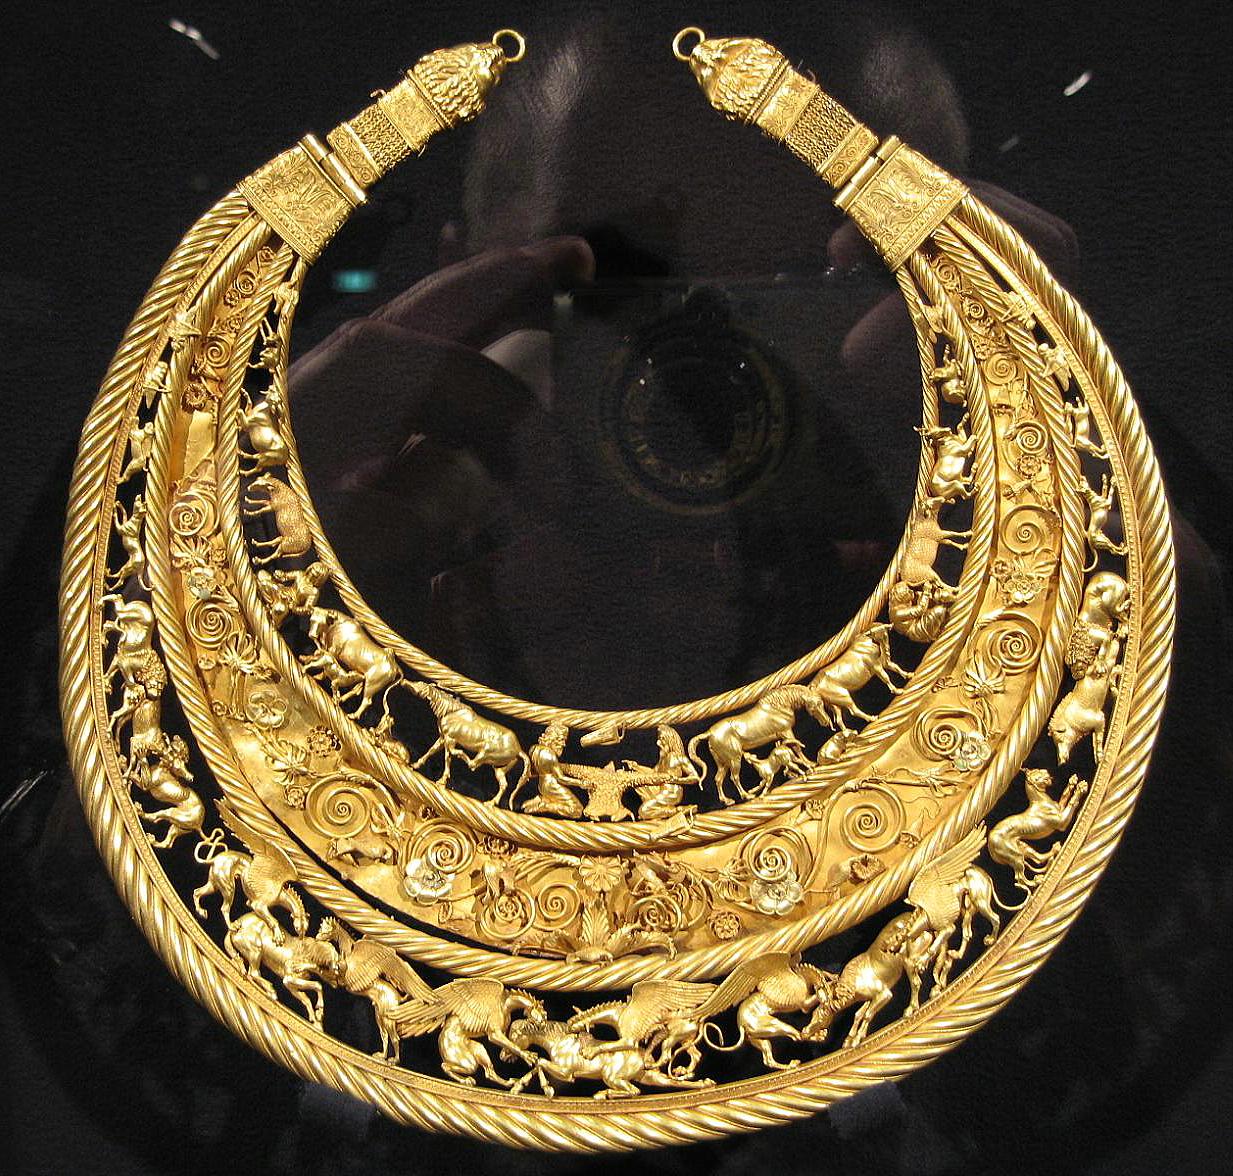 Scythian necklace